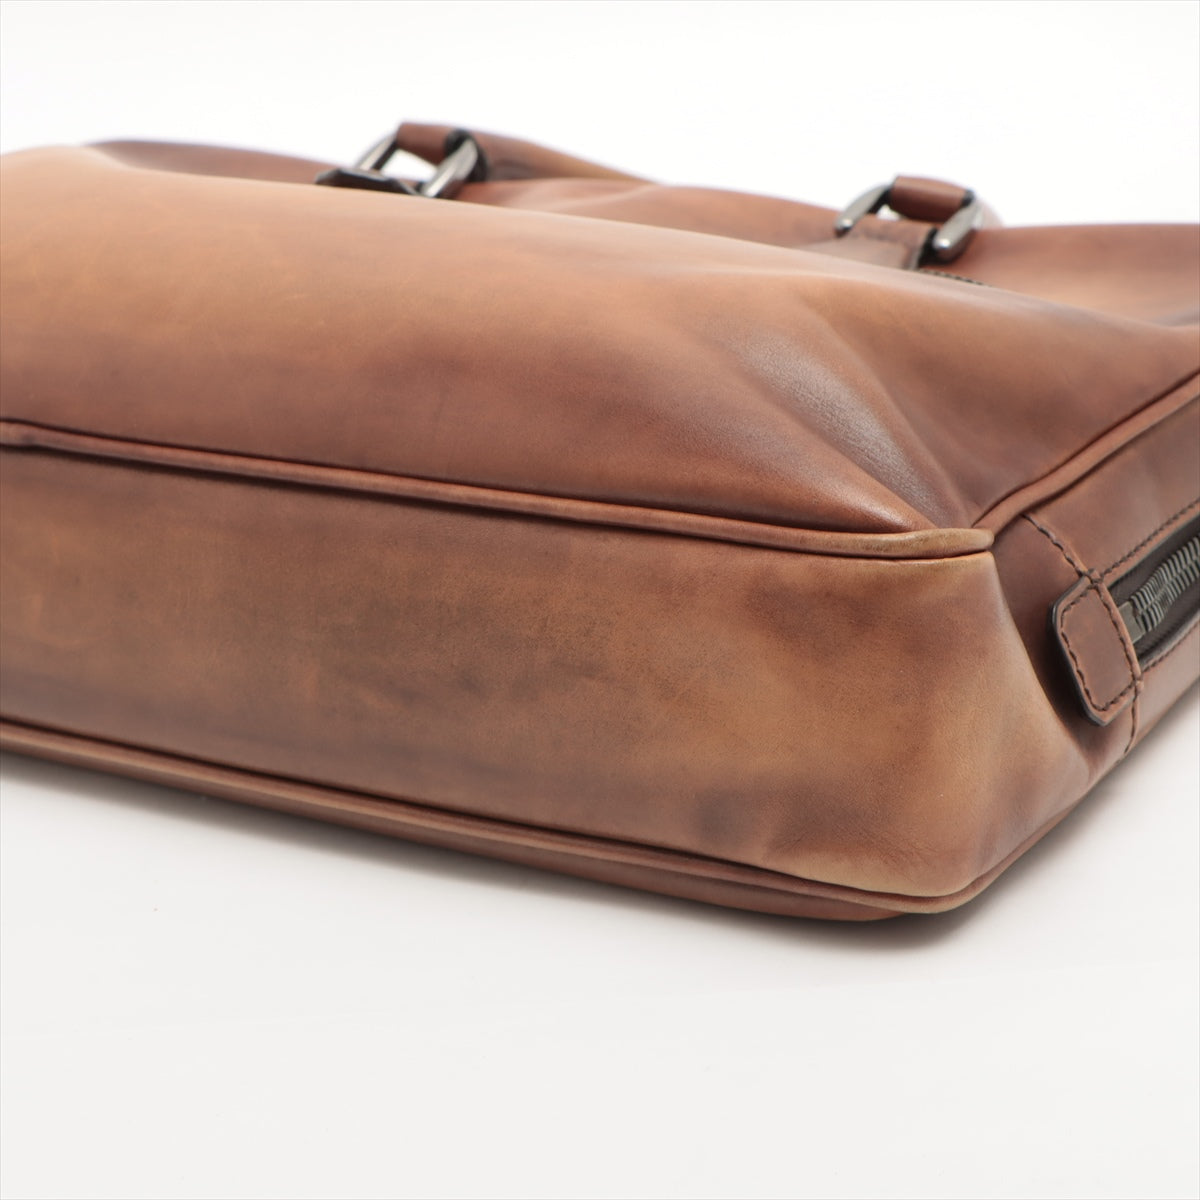 Berluti Un Jour Leather Business bag Brown